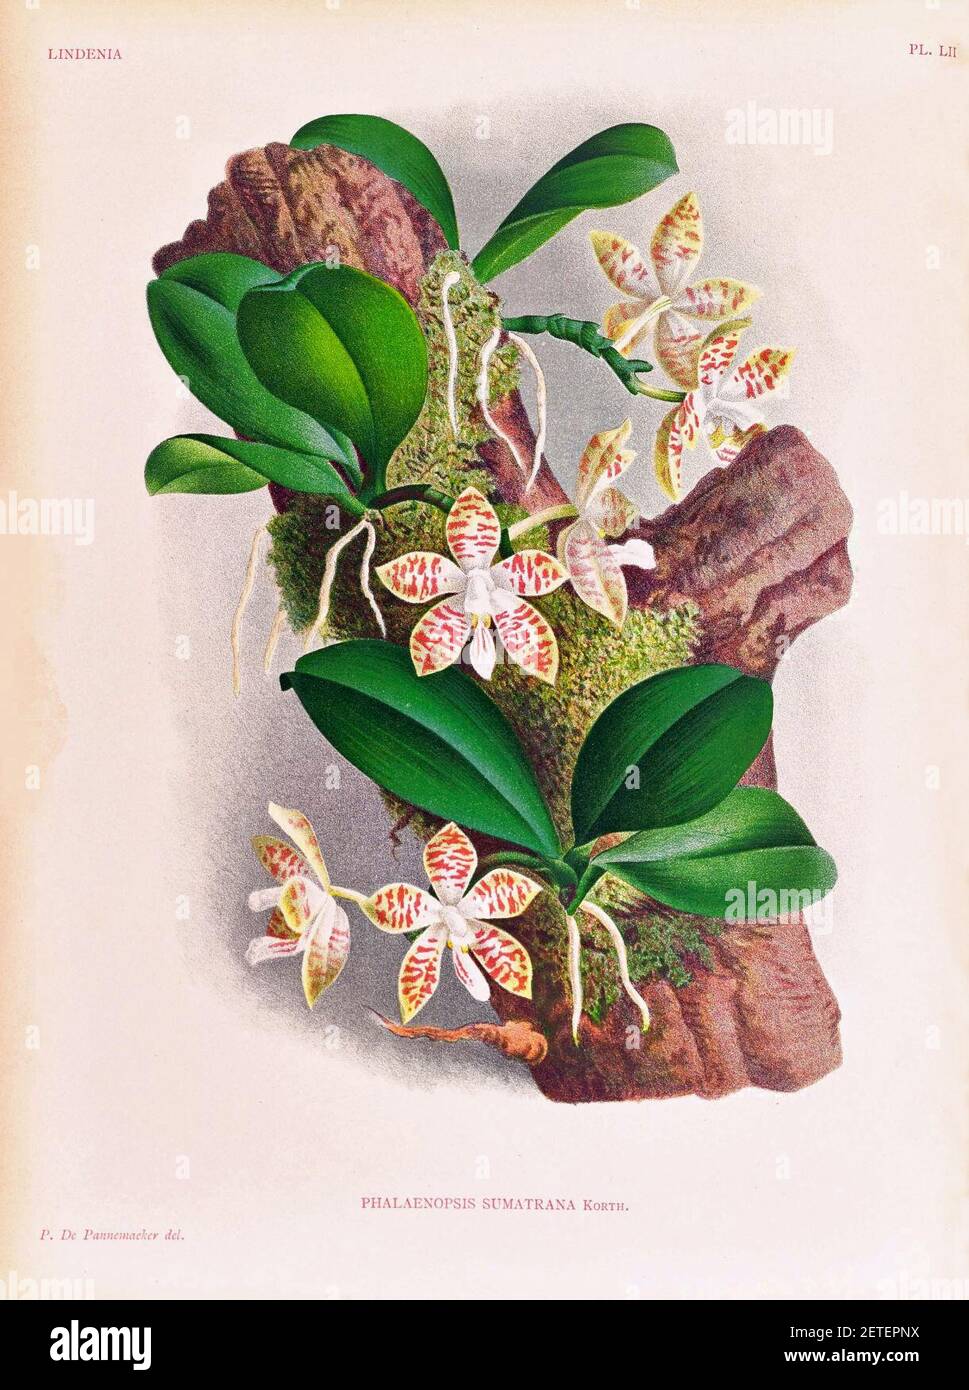 Phalaenopsis sumatrana Lindenia V2 pl LLII (1886). Stock Photo